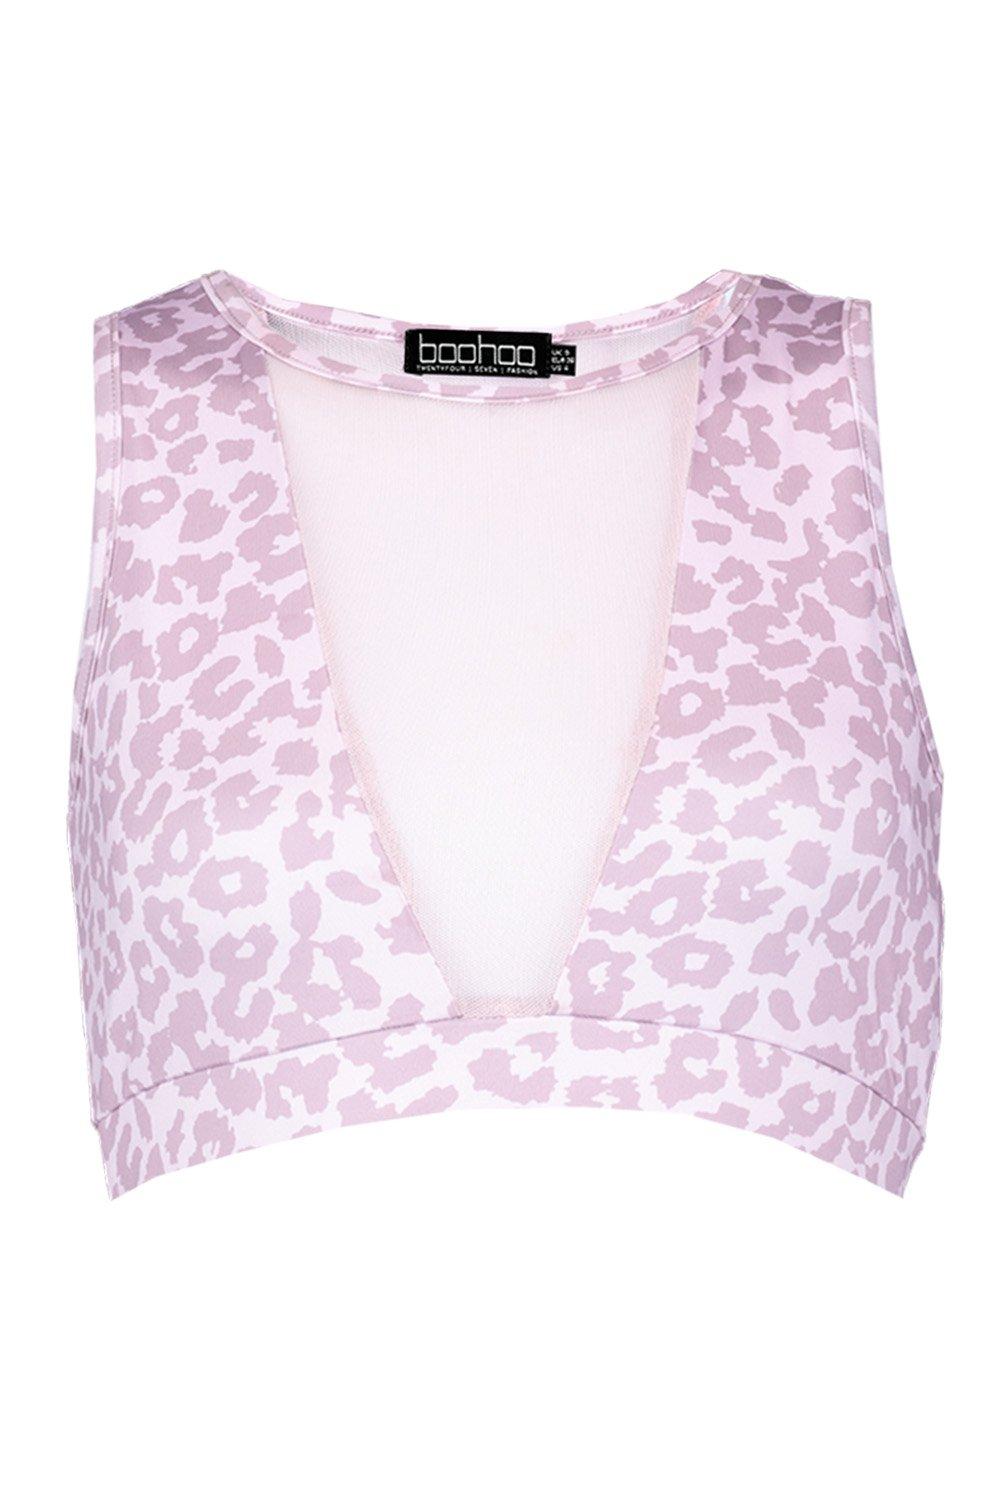 Sports bra with leopard print